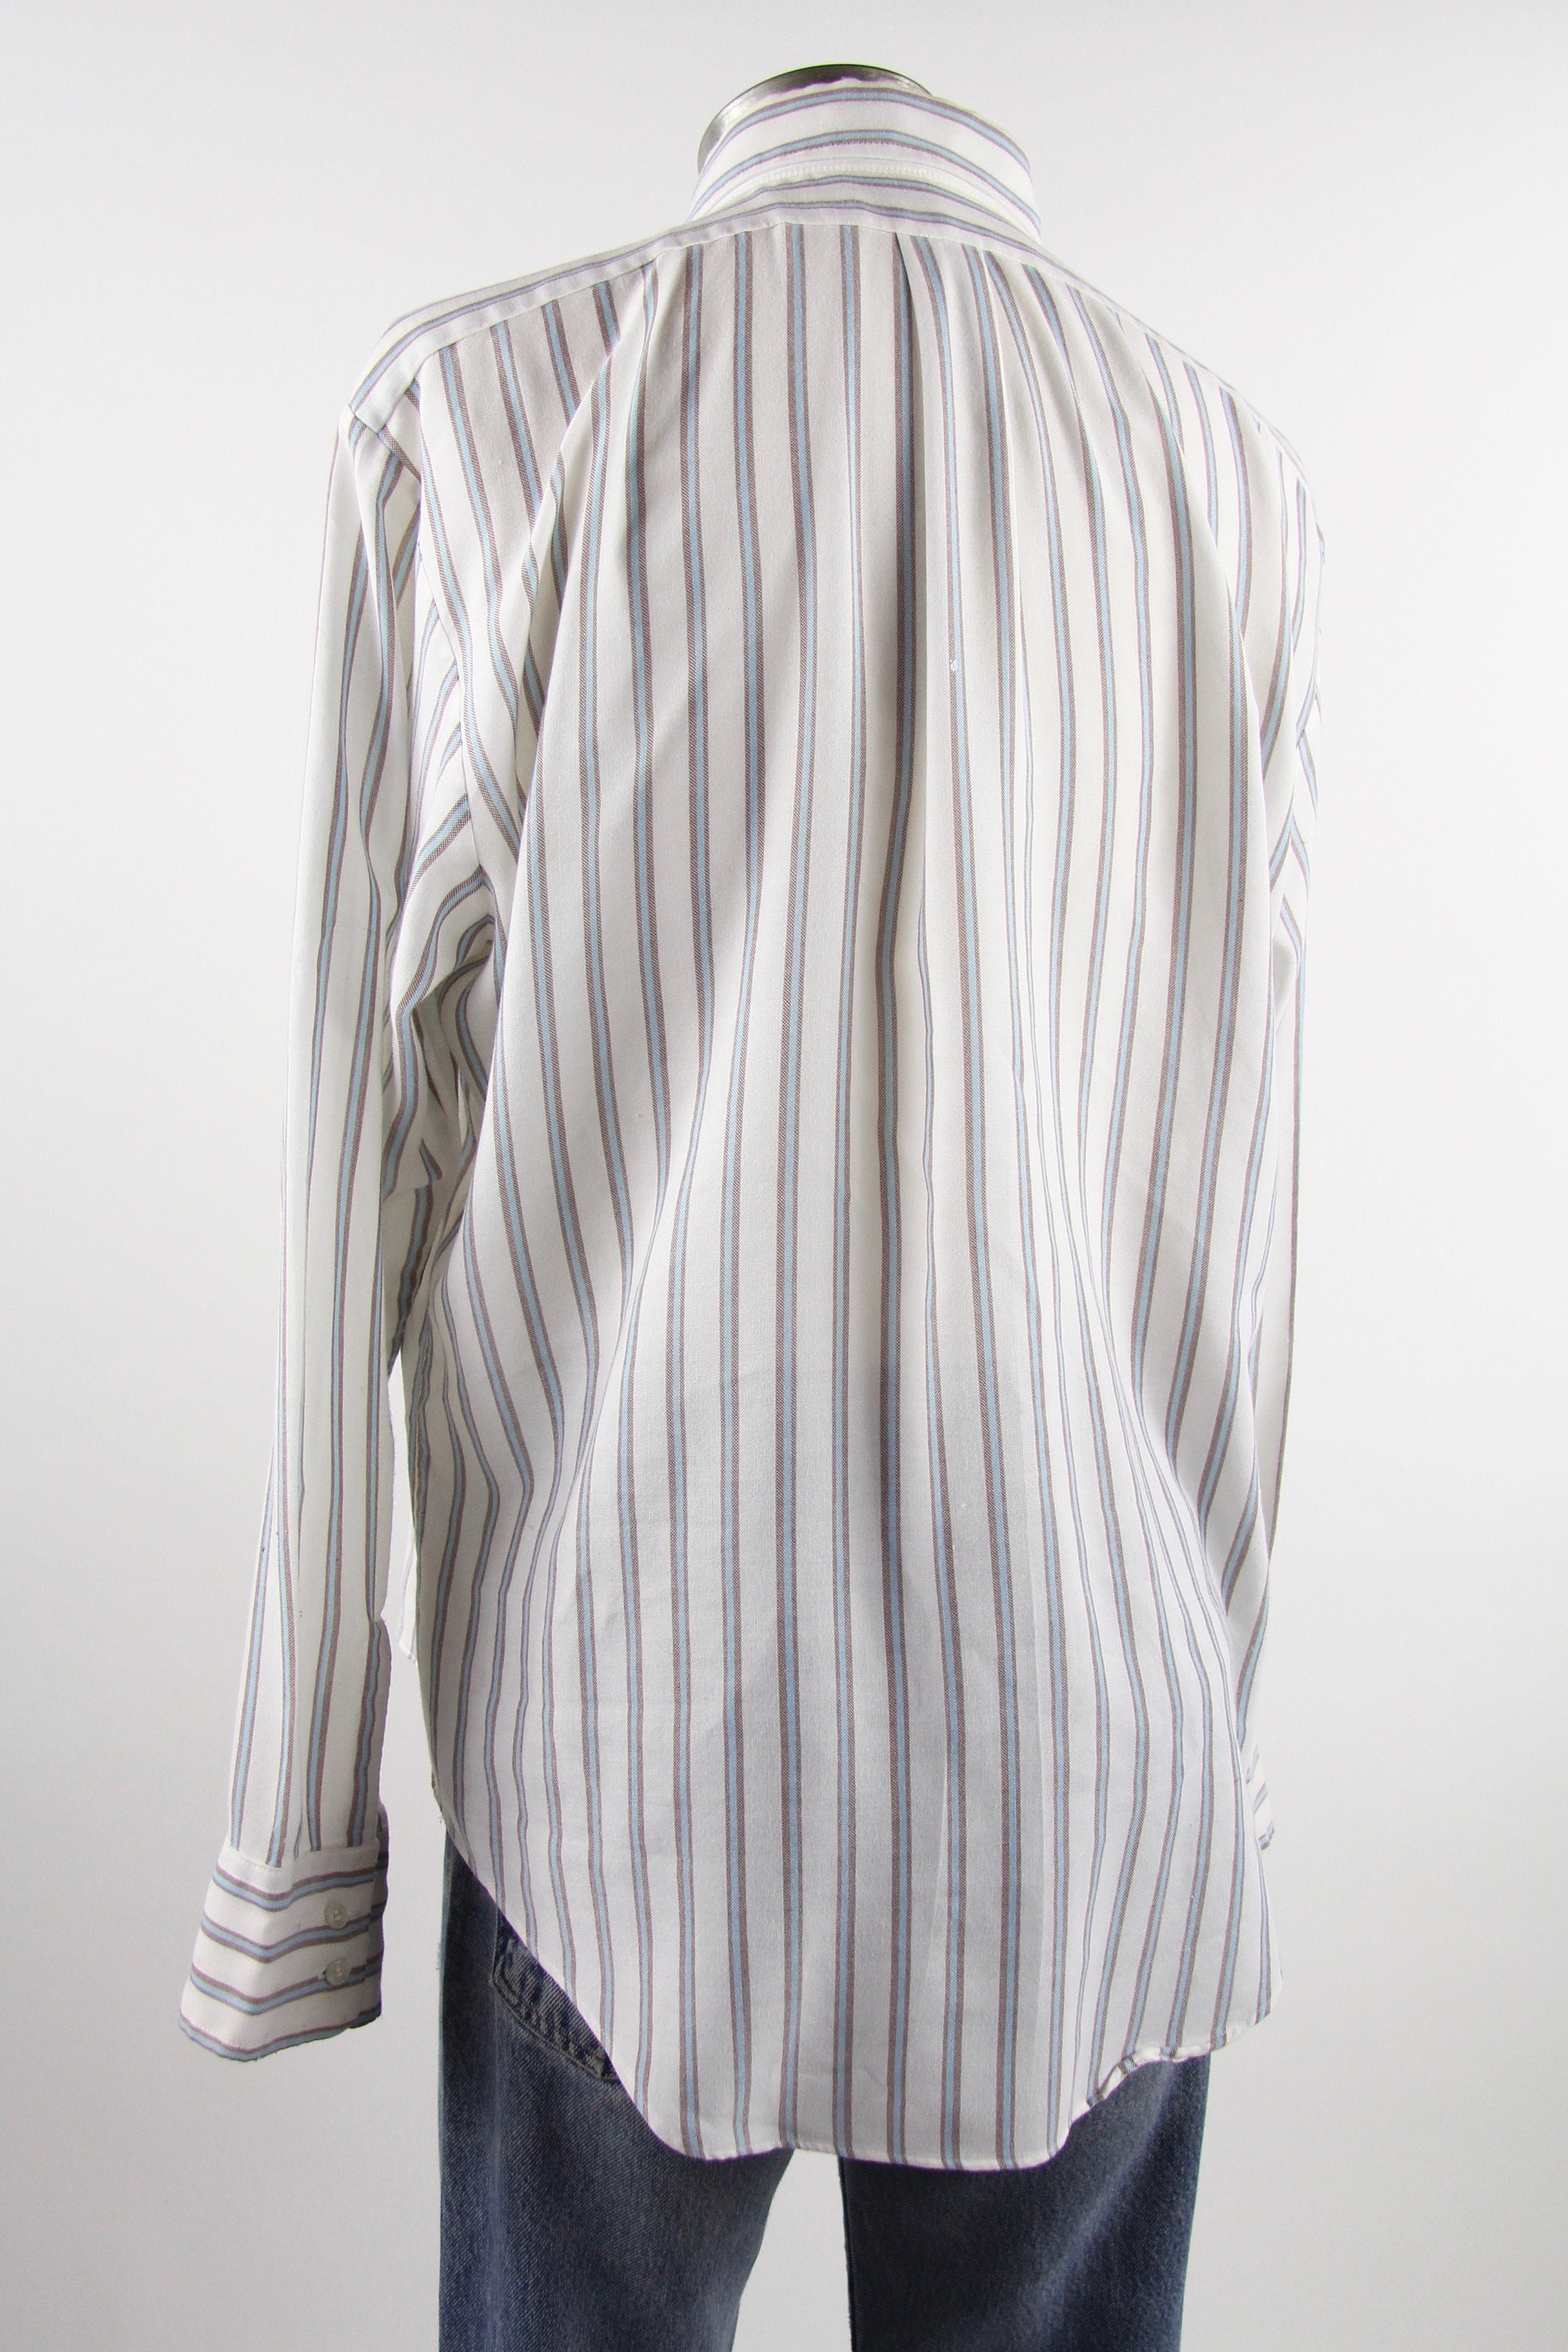 Striped Work Shirt White & Blue Men's Vintage Button Down Size Medium Large